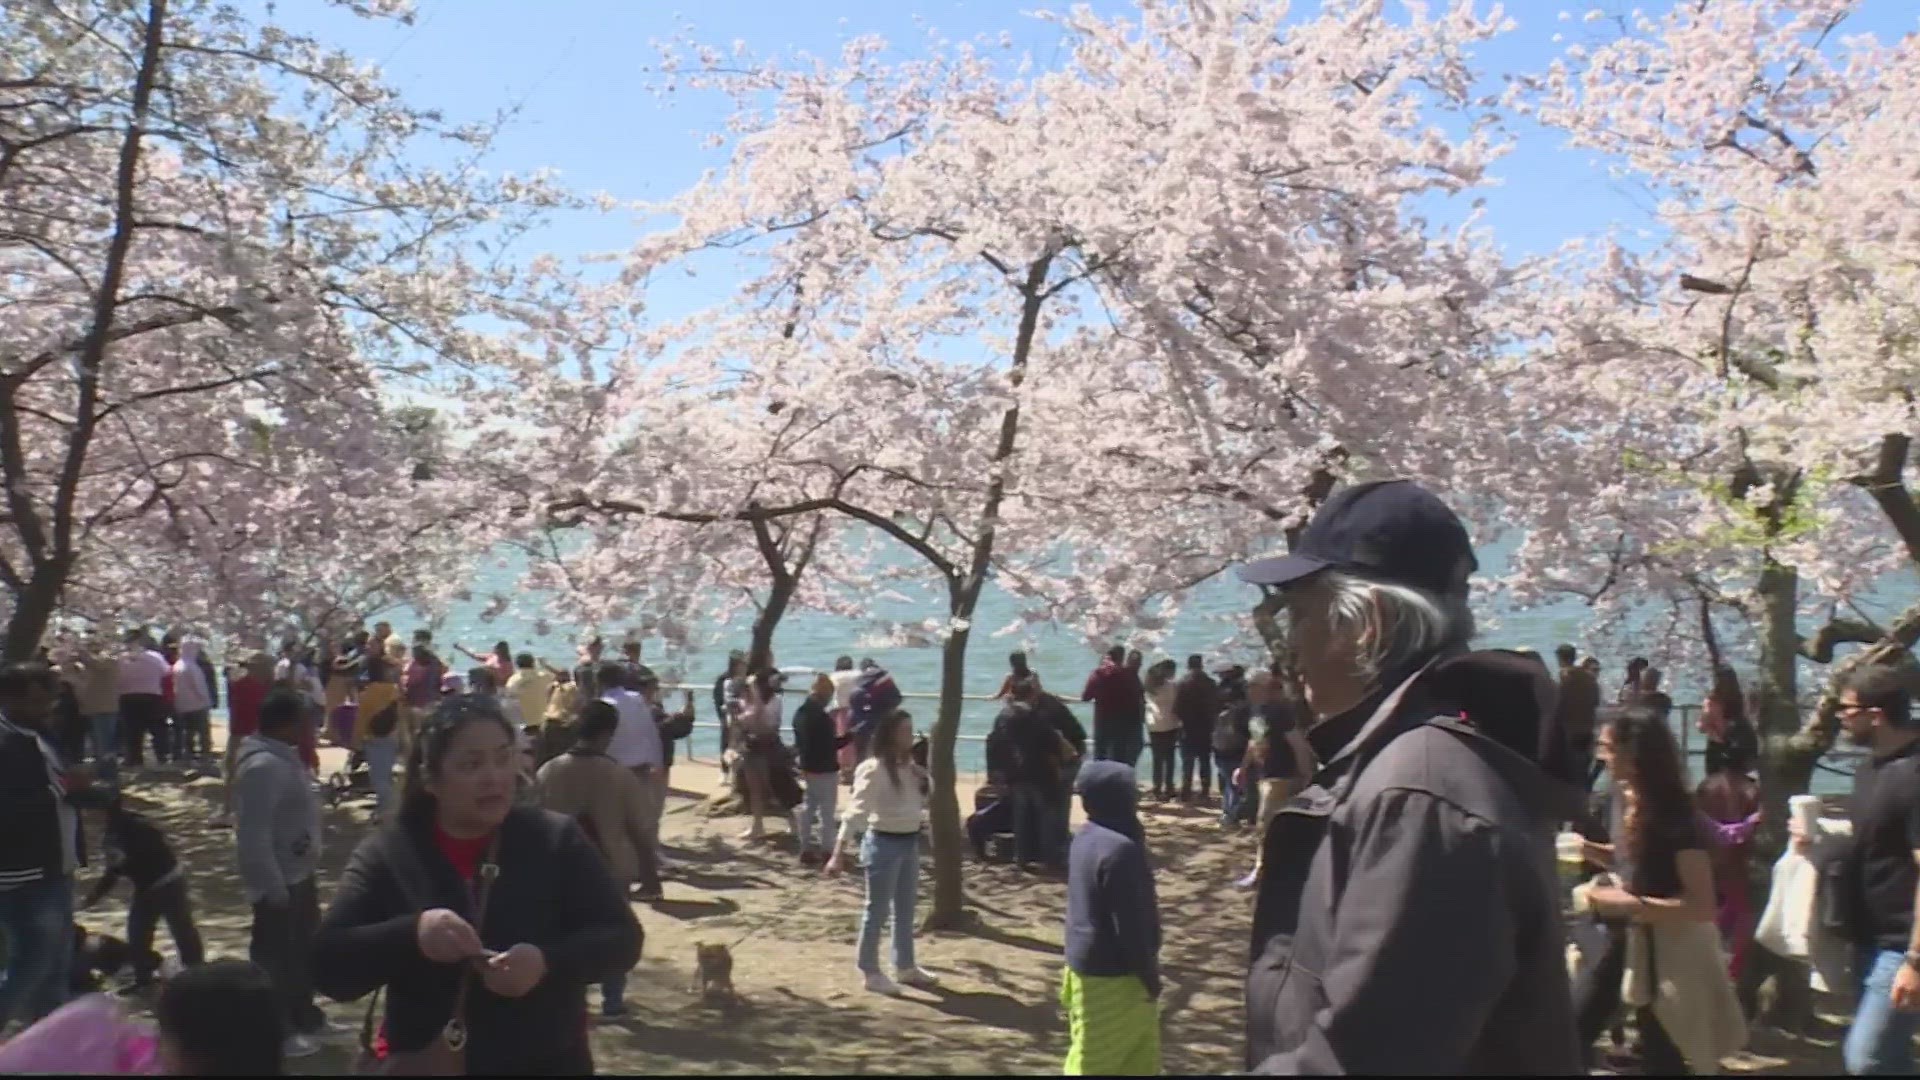 Virginia National Cherry Blossom Festival Activities